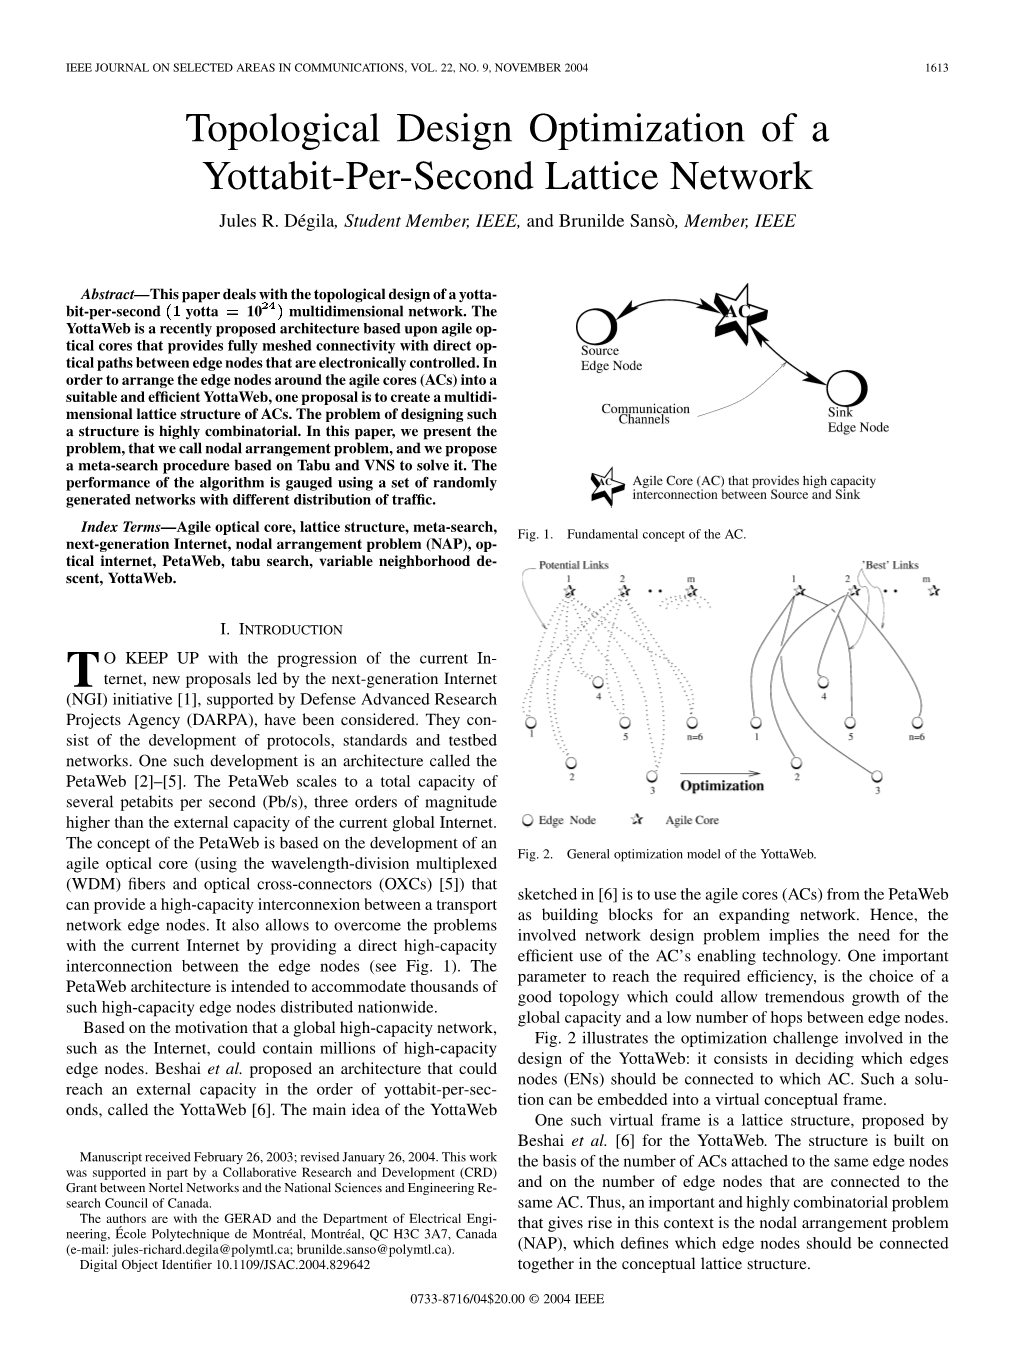 Topological Design Optimization of a Yottabit-Per-Second Lattice Network Jules R